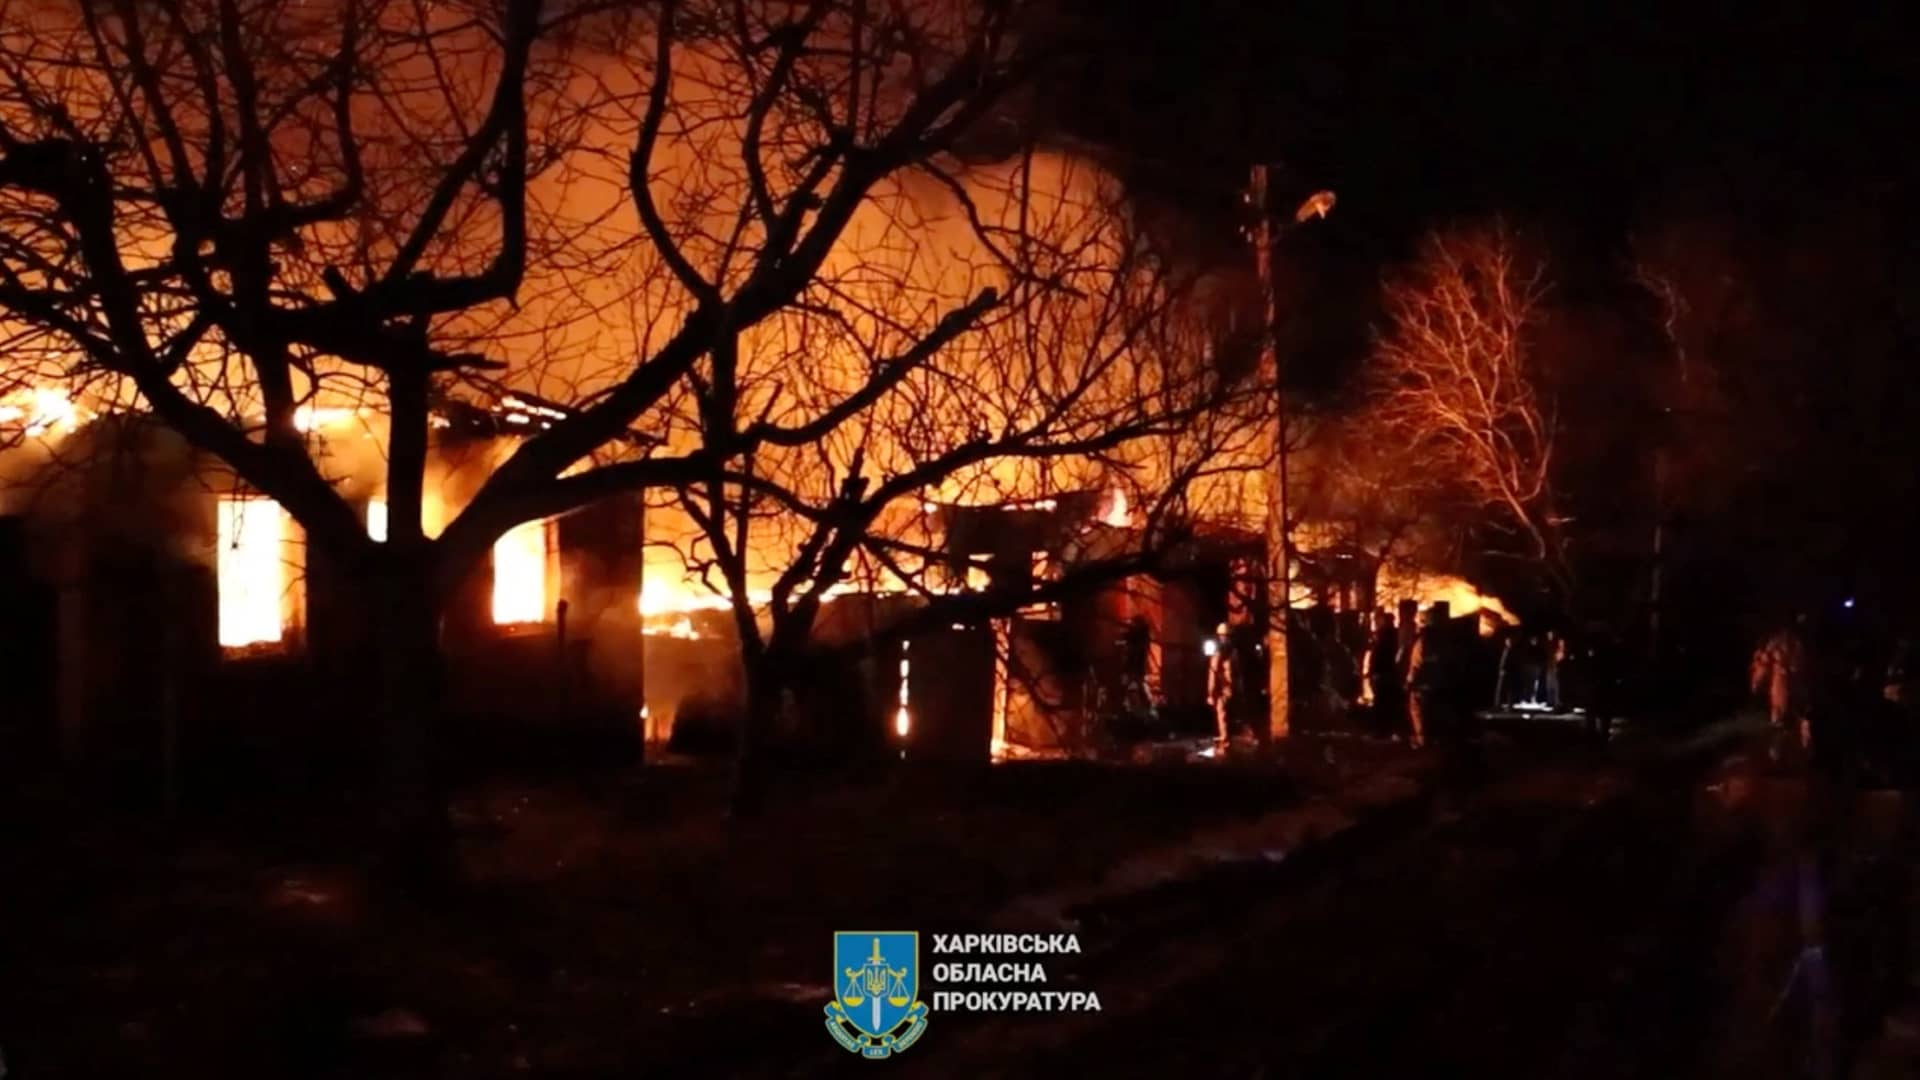 Russian drone strike on Kharkiv, Ukraine&#x27s 2nd major metropolis, kills at minimum 7